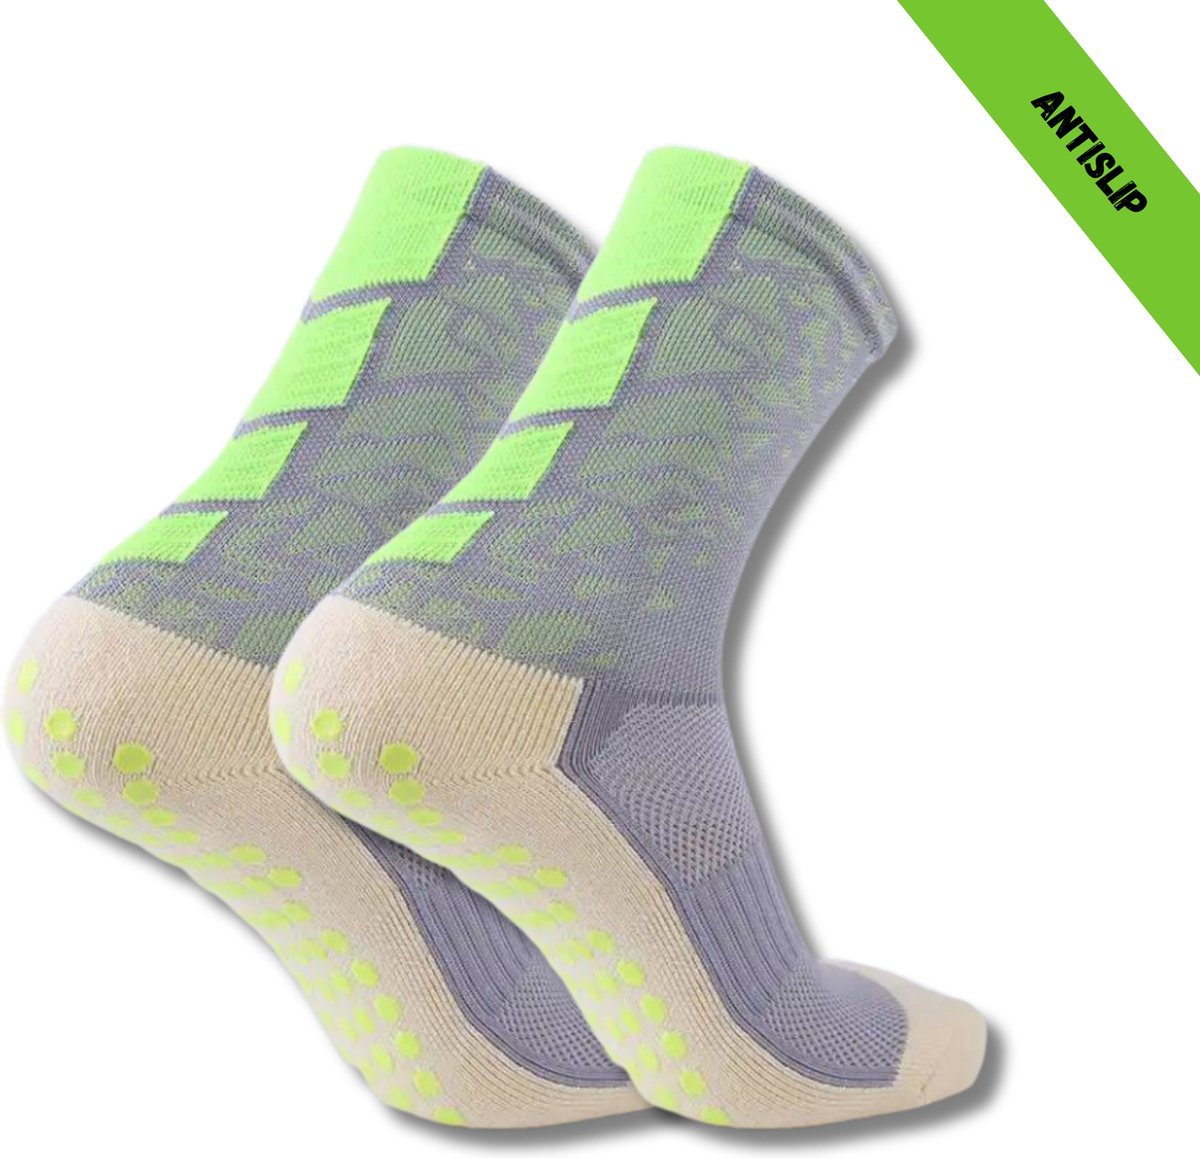 Gripsokken - Sportsokken - Gripsokken Voetbal - Gripsokken Voetbal Grijs/Neon - Grip Socks - Pilates Sokken - Yoga Sokken - Anti Blaren - One Size - Compressie